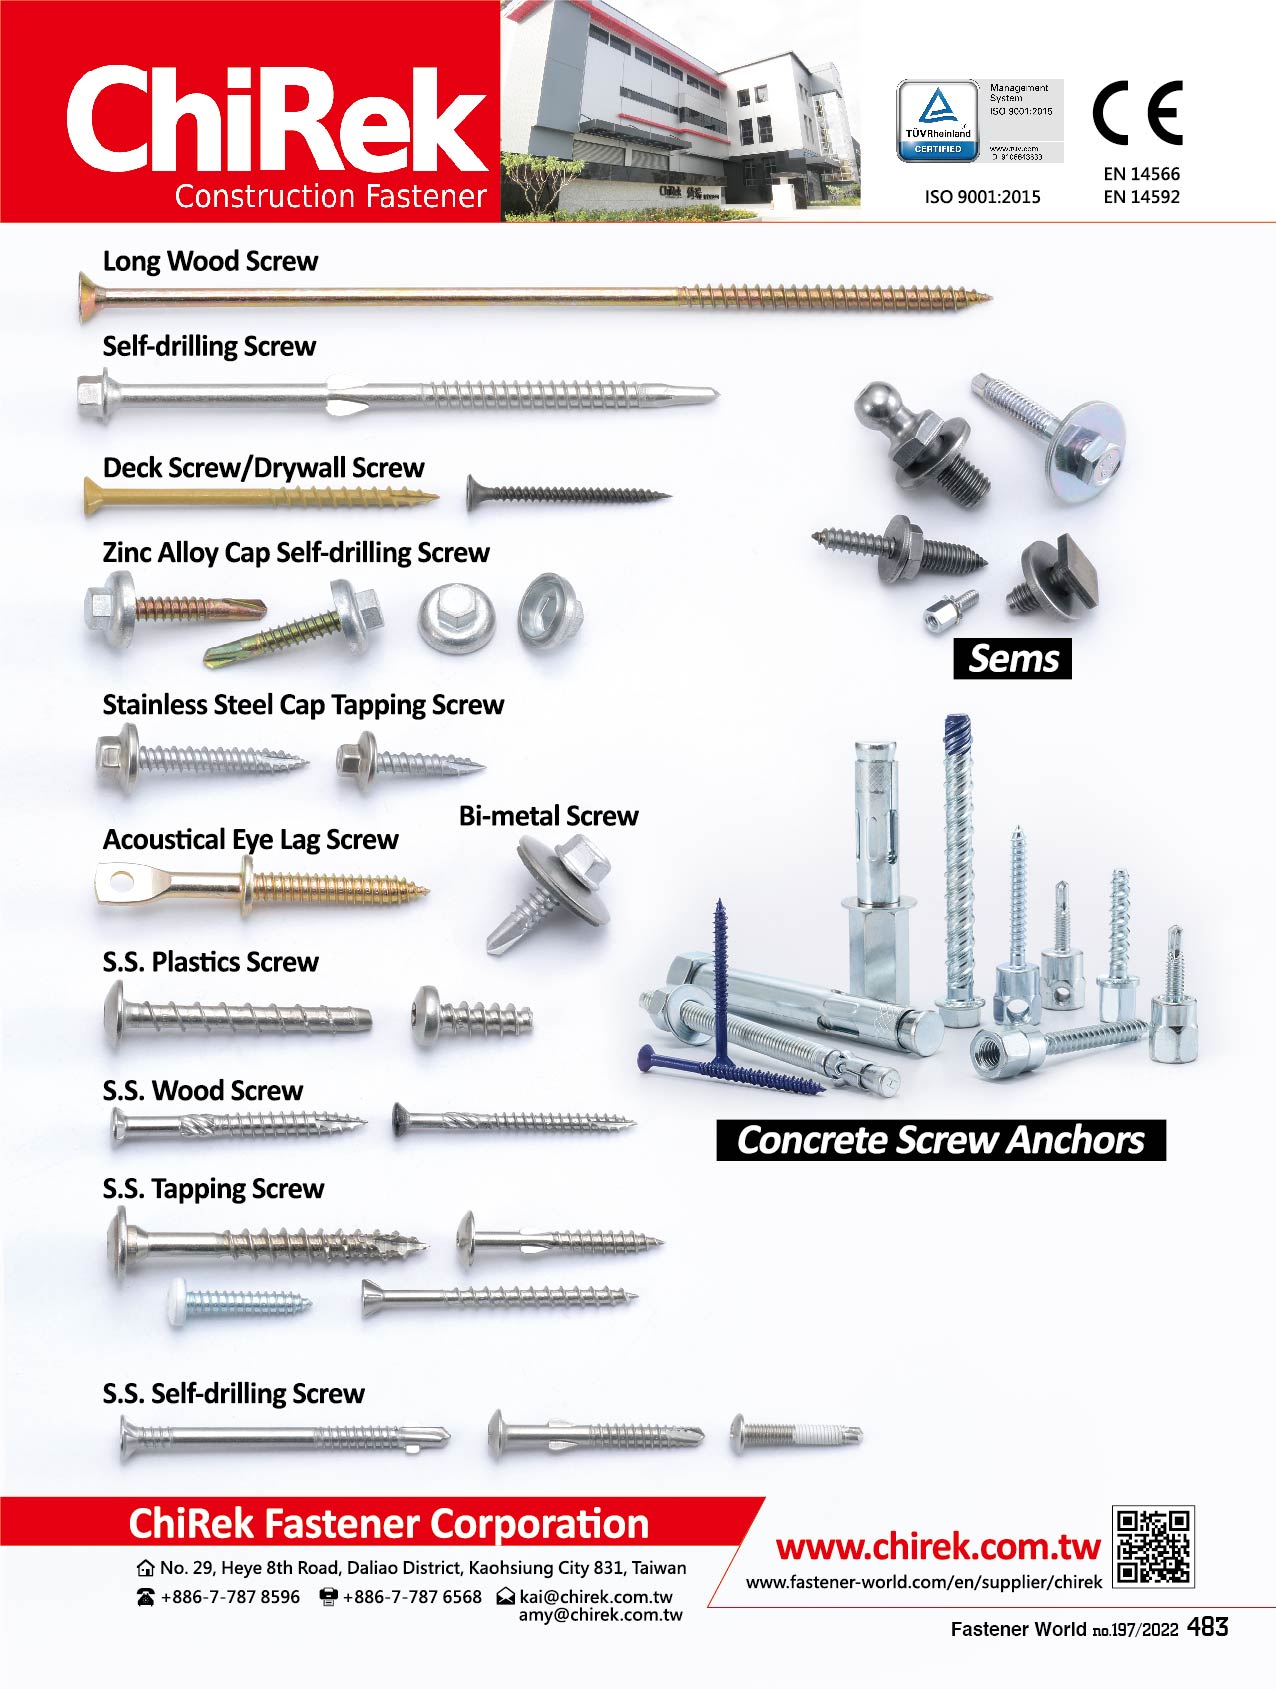 ChiRek Fastener Corporation , Long Wood Screws, Self-drilling Screws, Deck Screws, Drywall Screws, Zinc Alloy Cap Self-drilling Screws, Stainless Steel Cap Tappping Screws, Bi-metal Screws, Sems, Acoustical Eye Lag Screws, Concrete Screws Anchors, S.S. Plastics Screws, S.S. Wood Screws, S.S. Tapping Screws, S.S. Self-drilling Screws